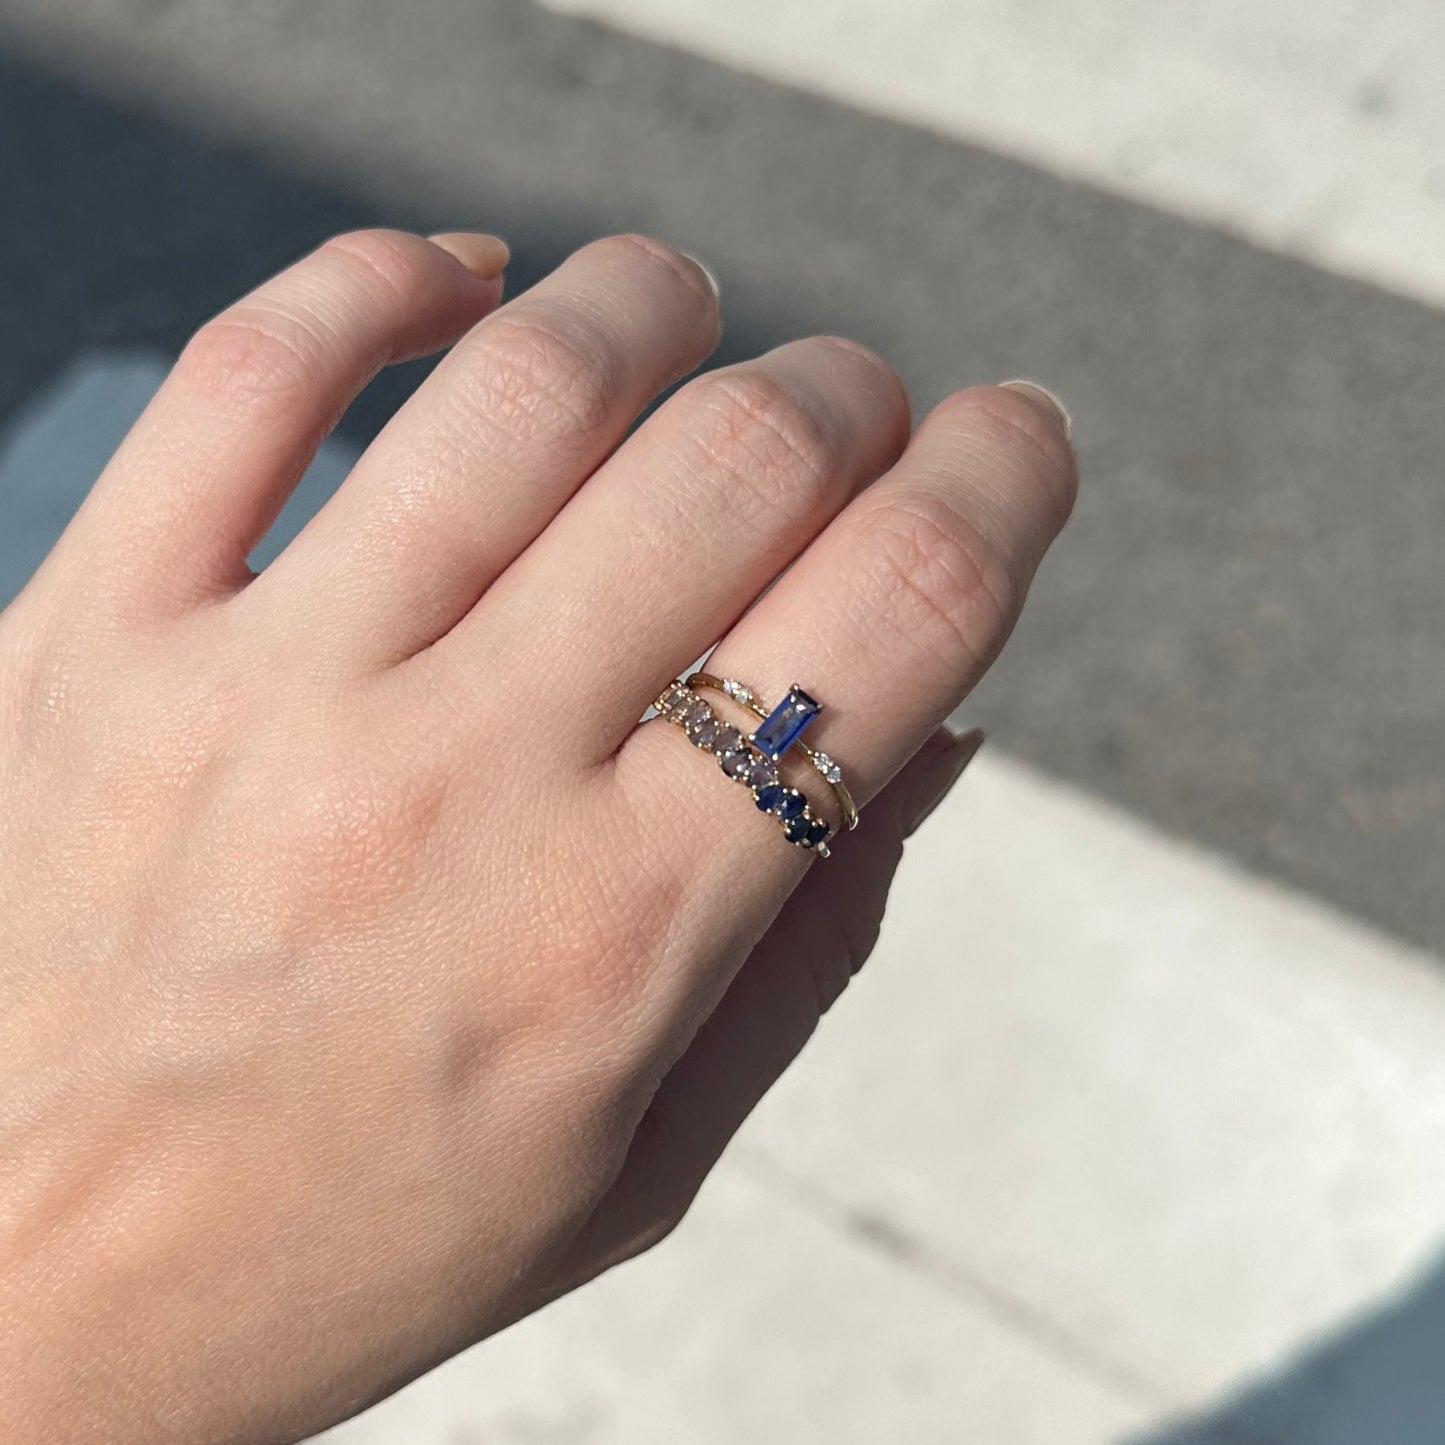 Solid Gold September Capsule Blue Sapphire Baguette Ring